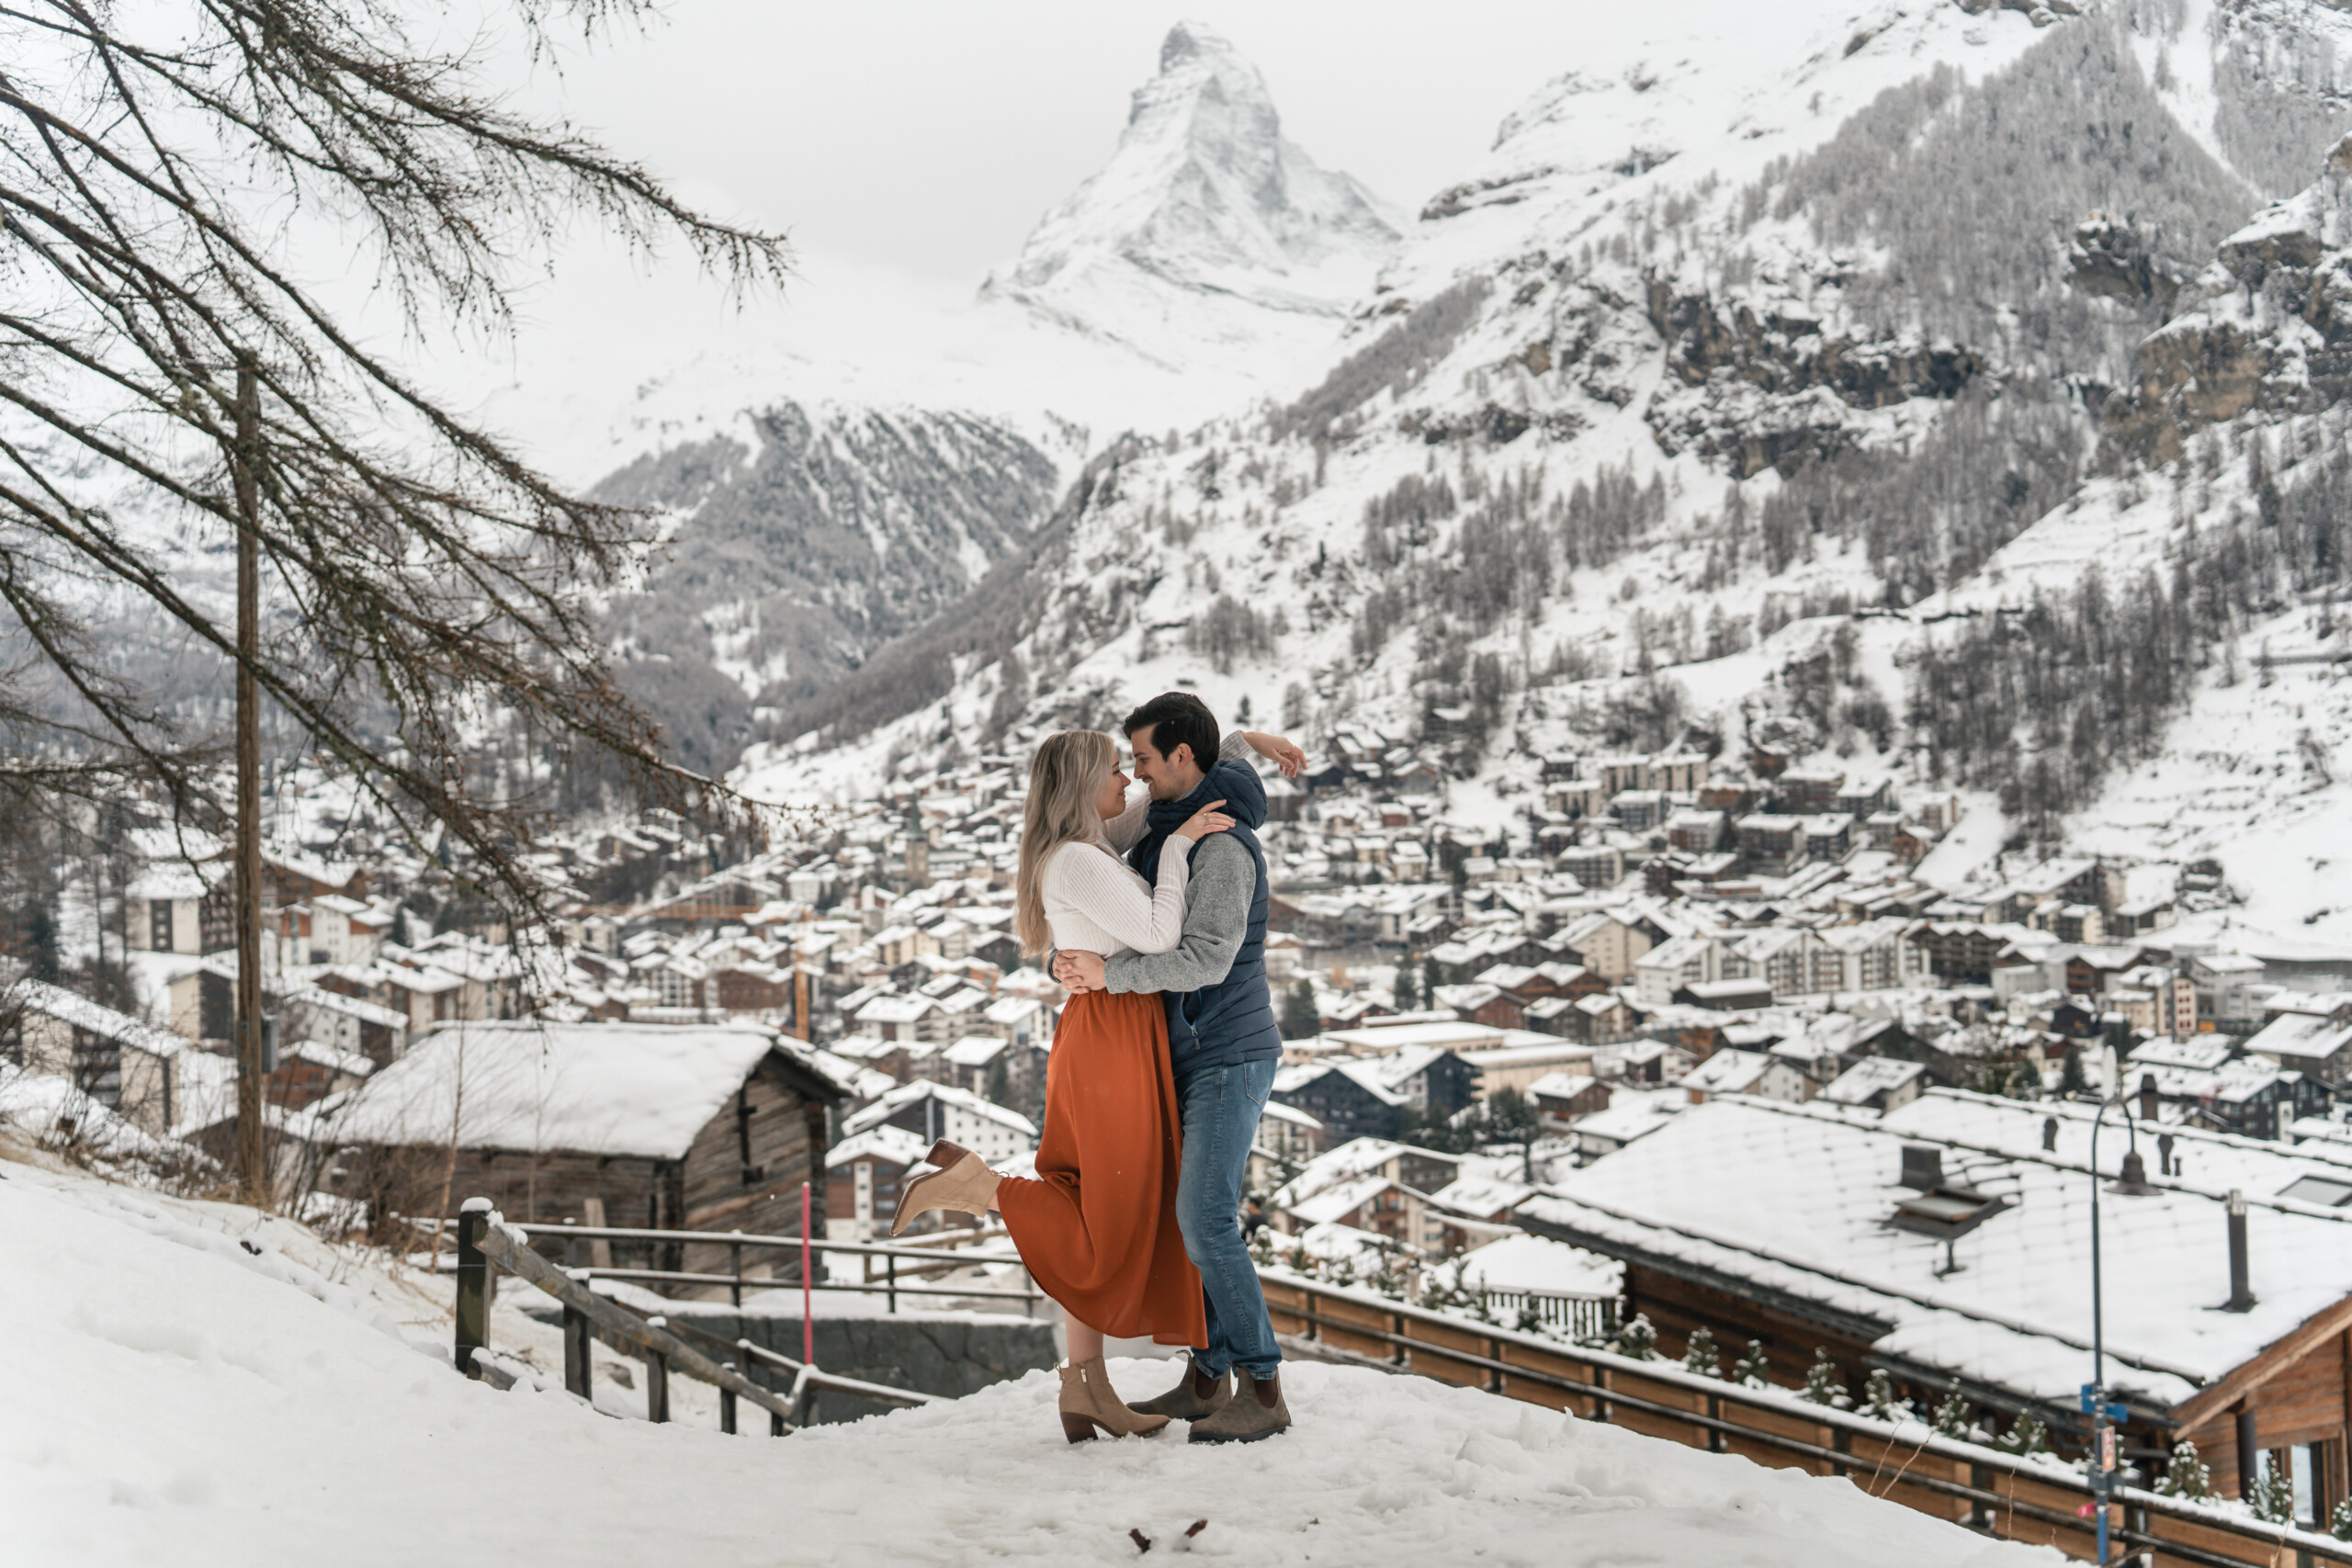 proposal photoshoot by Enric, Localgrapher in Zermatt